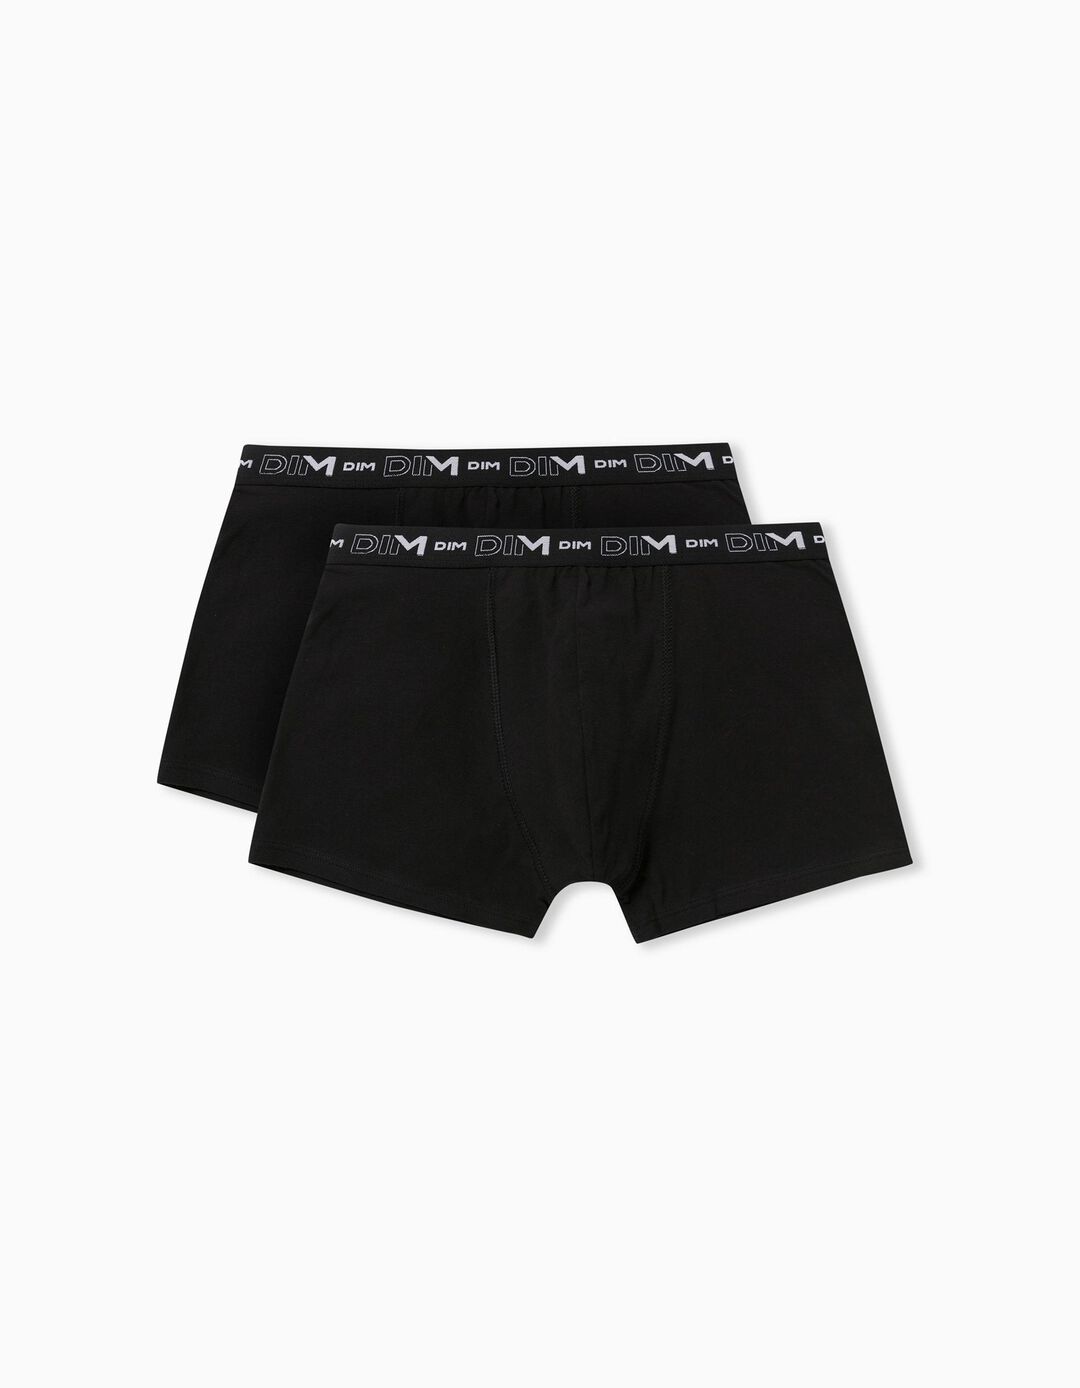 2 Pairs 'DIM Ultra Confort' Boxer Shorts, Men